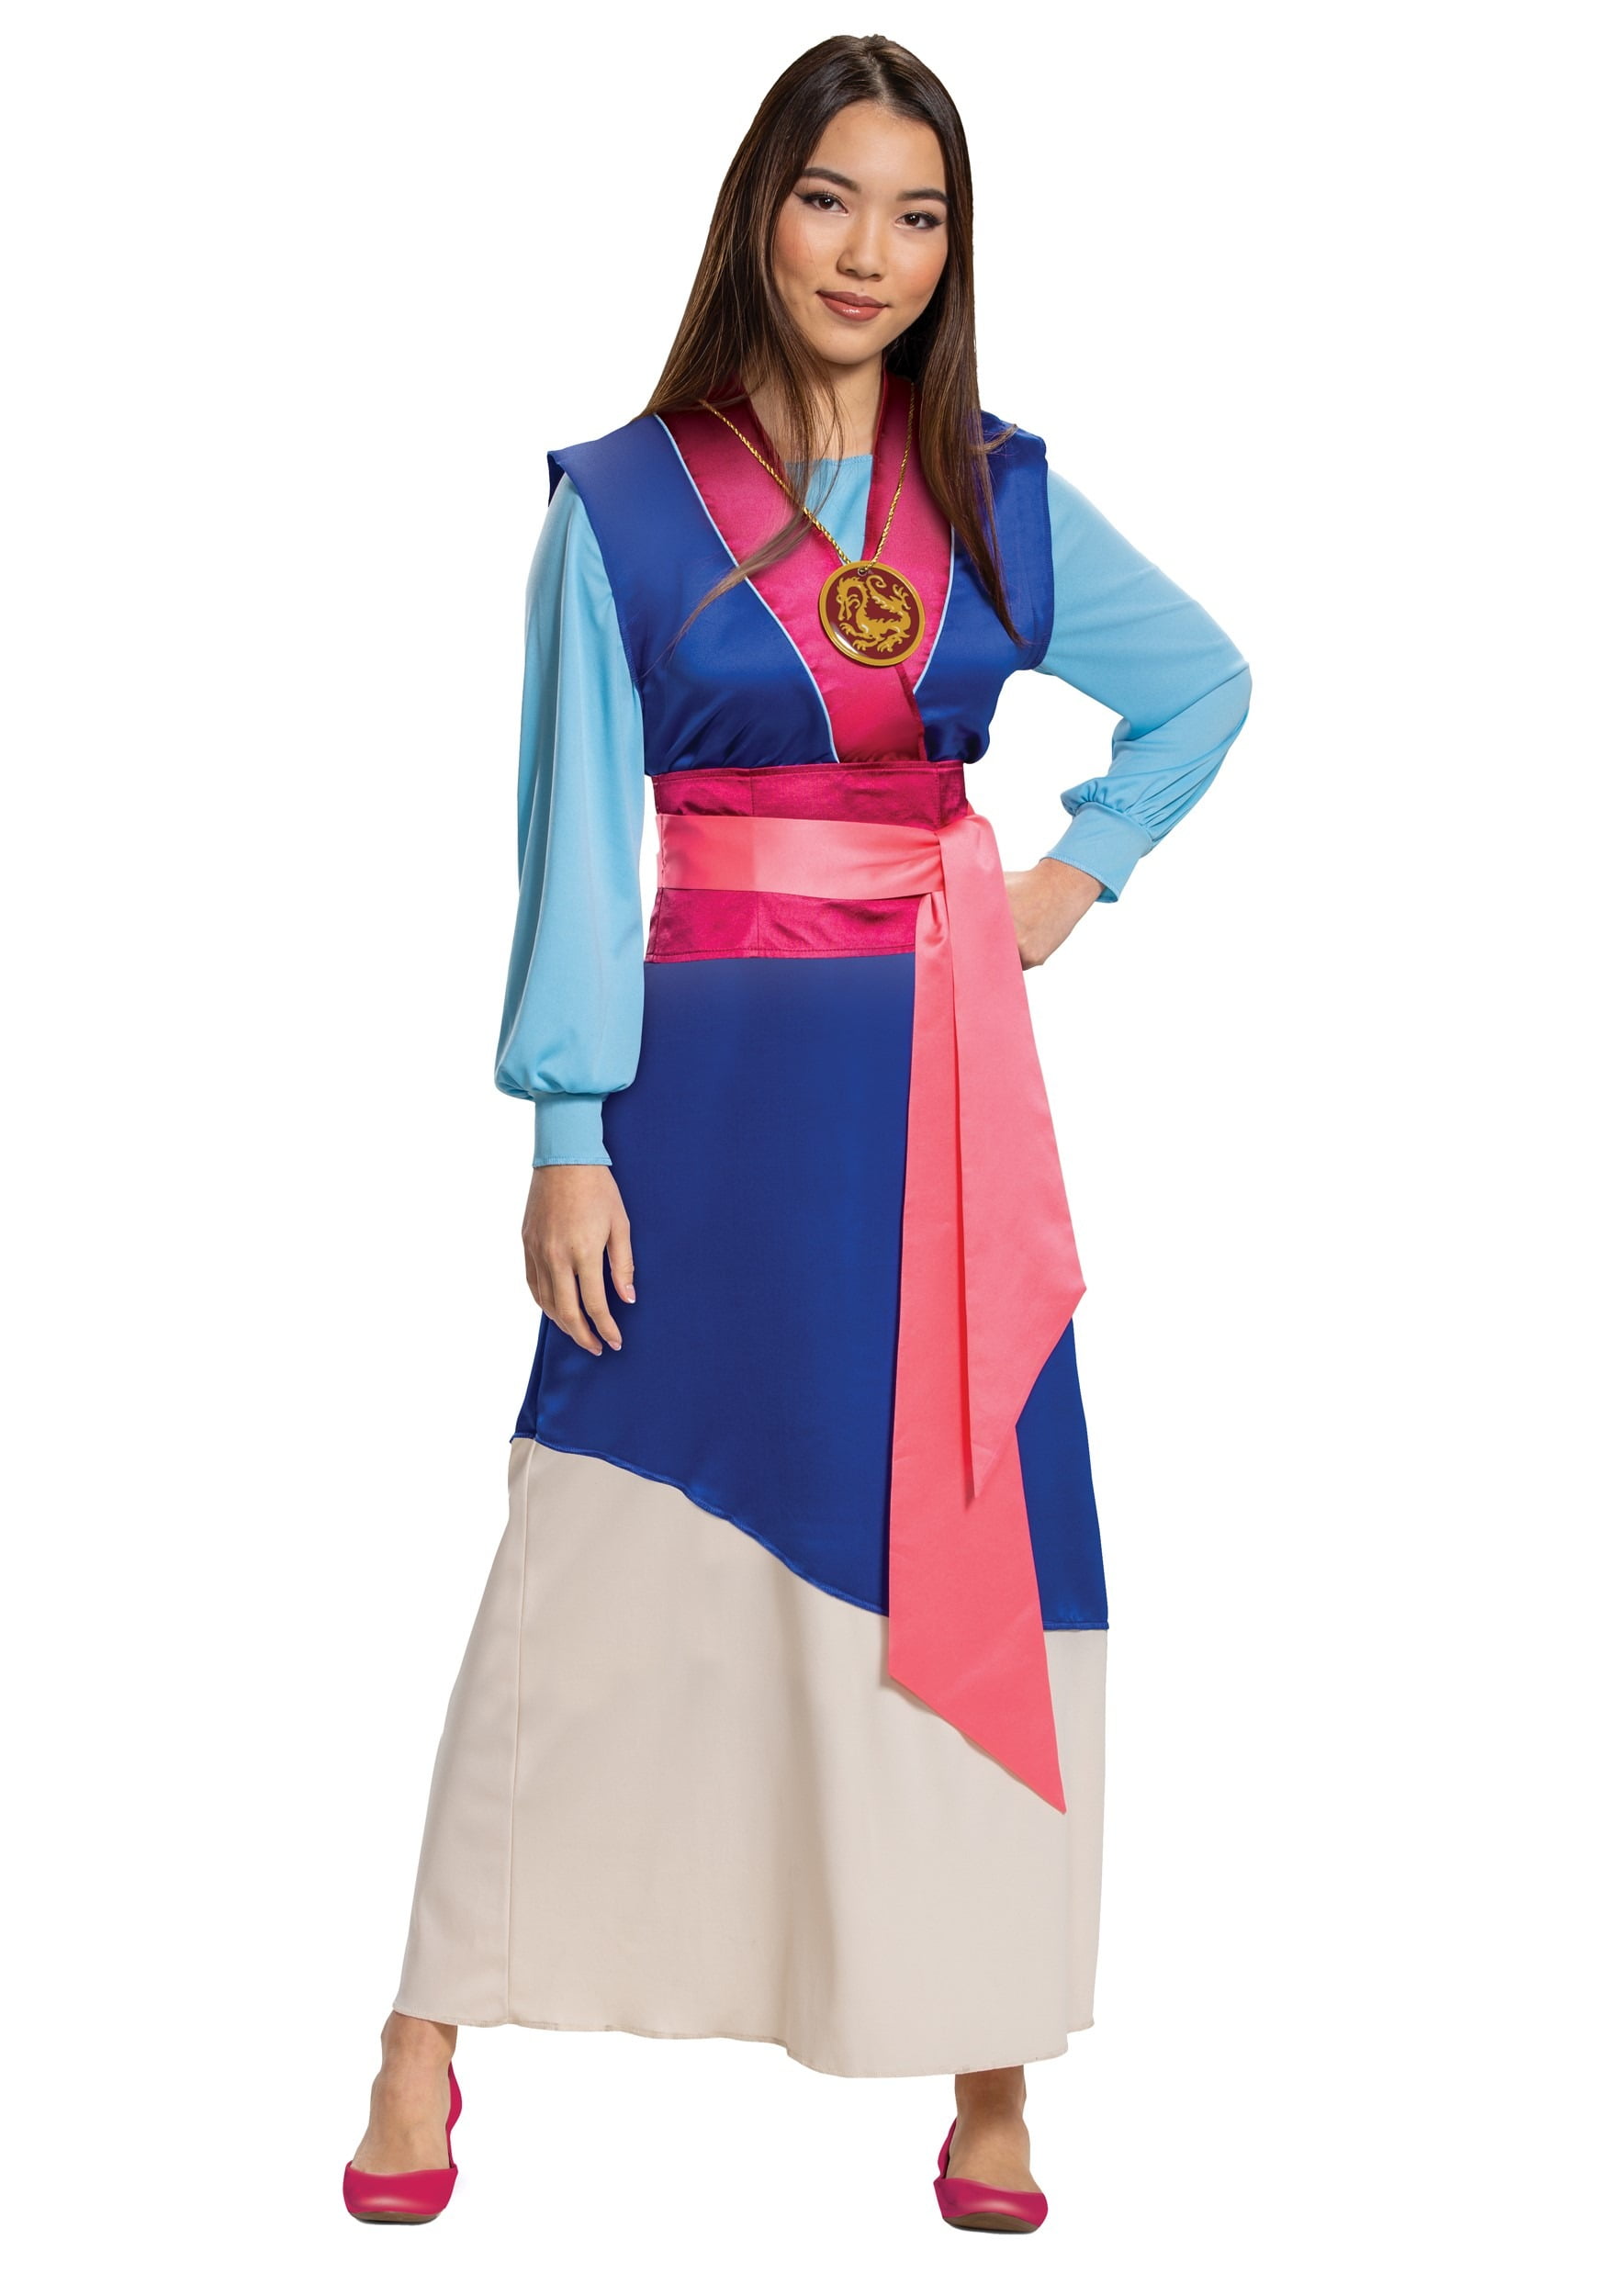 Girls Disney Princess MULAN Deluxe Costume Size 3T/4T 7/8 Dress Up Halloween NEW 